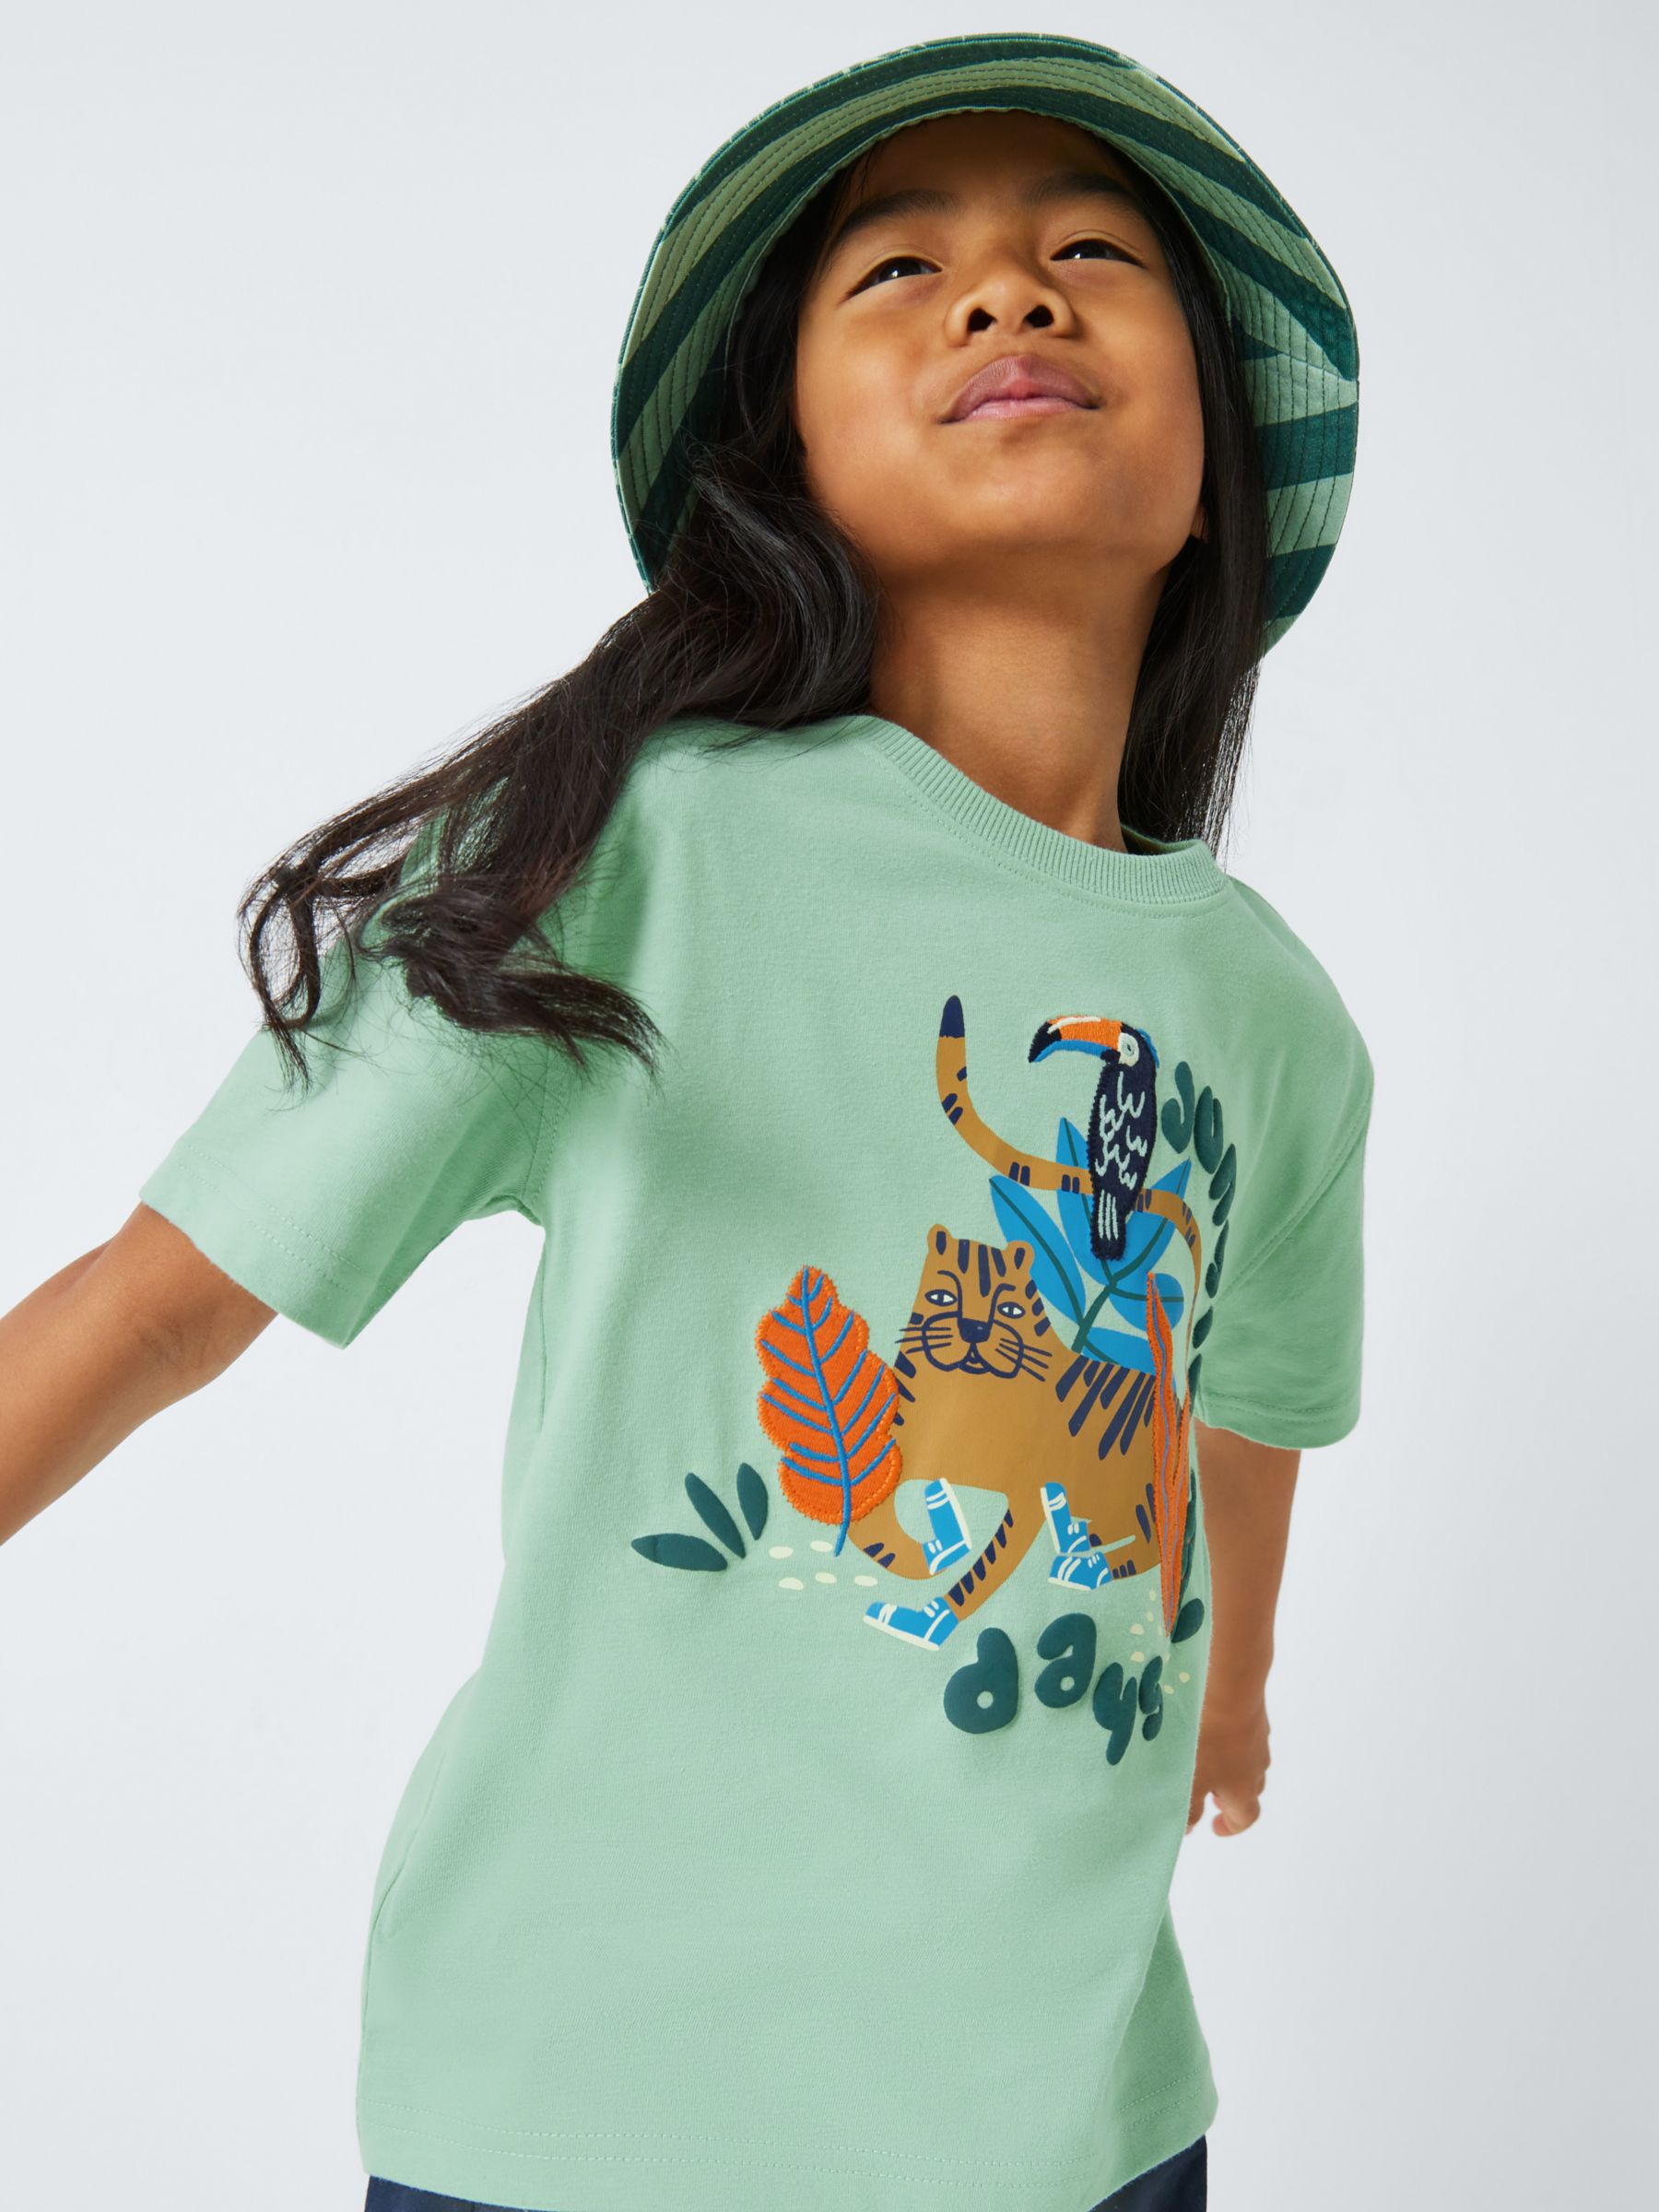 John Lewis Kids' Jungle Days Graphic Print T-Shirt, Green, 5 years